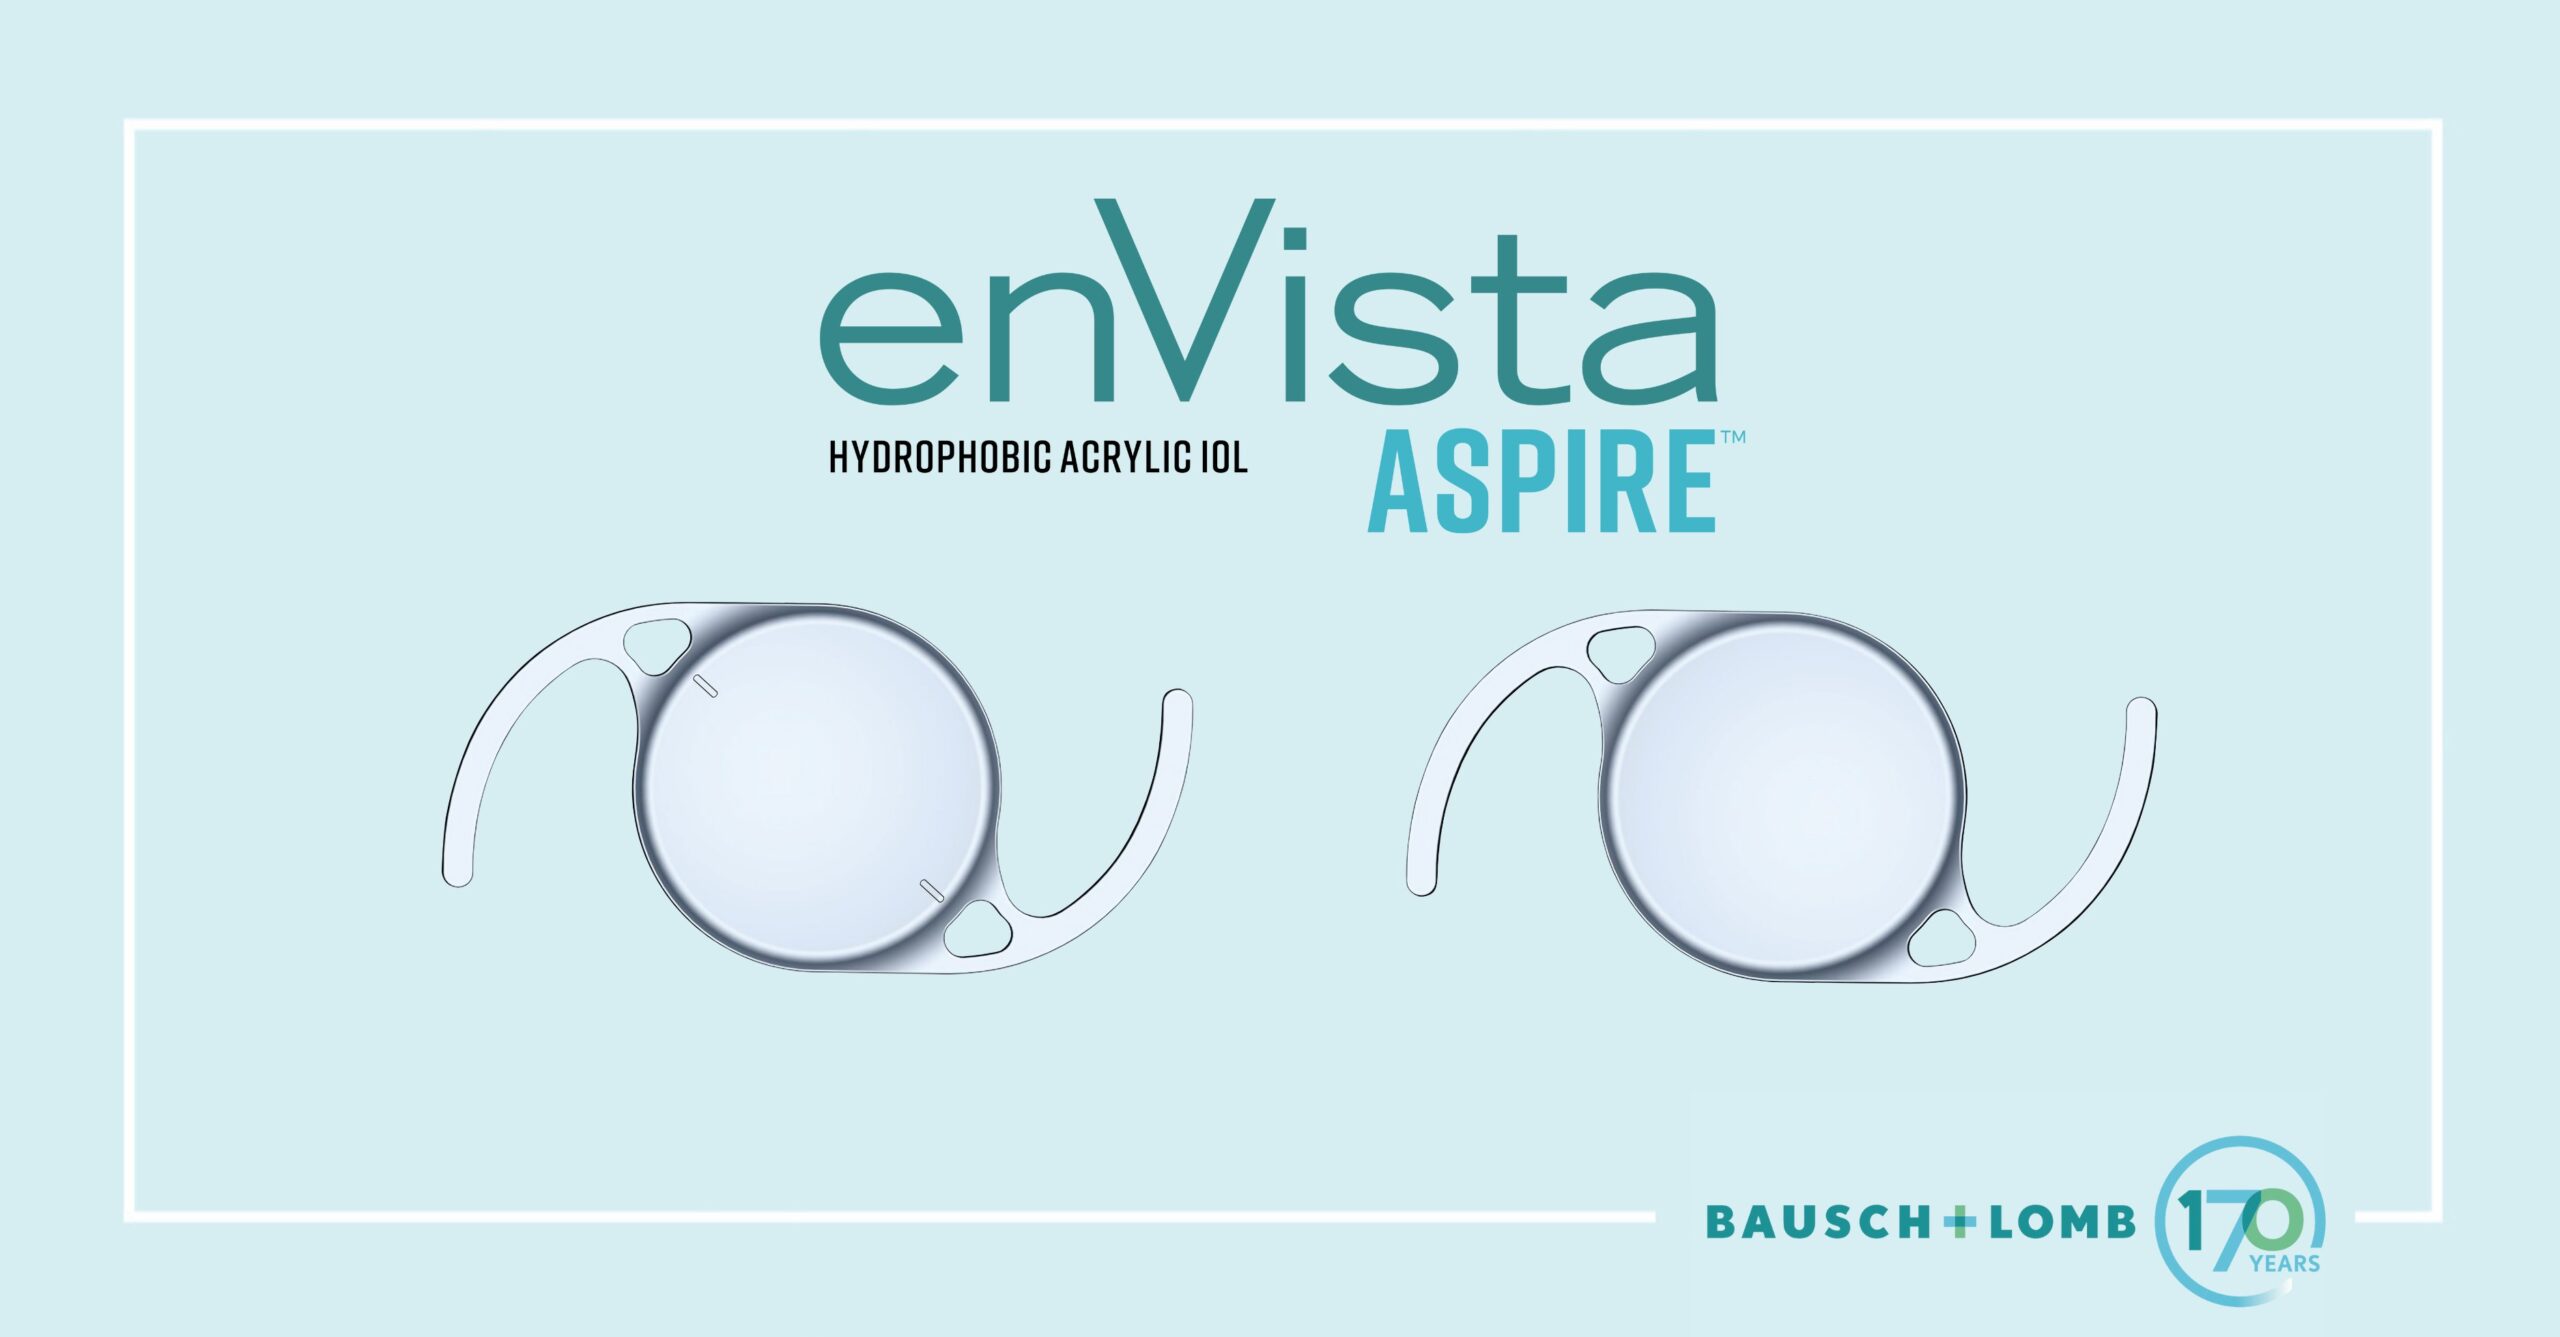 Bausch + Lomb enVista Aspire: Transforming Cataract Surgery